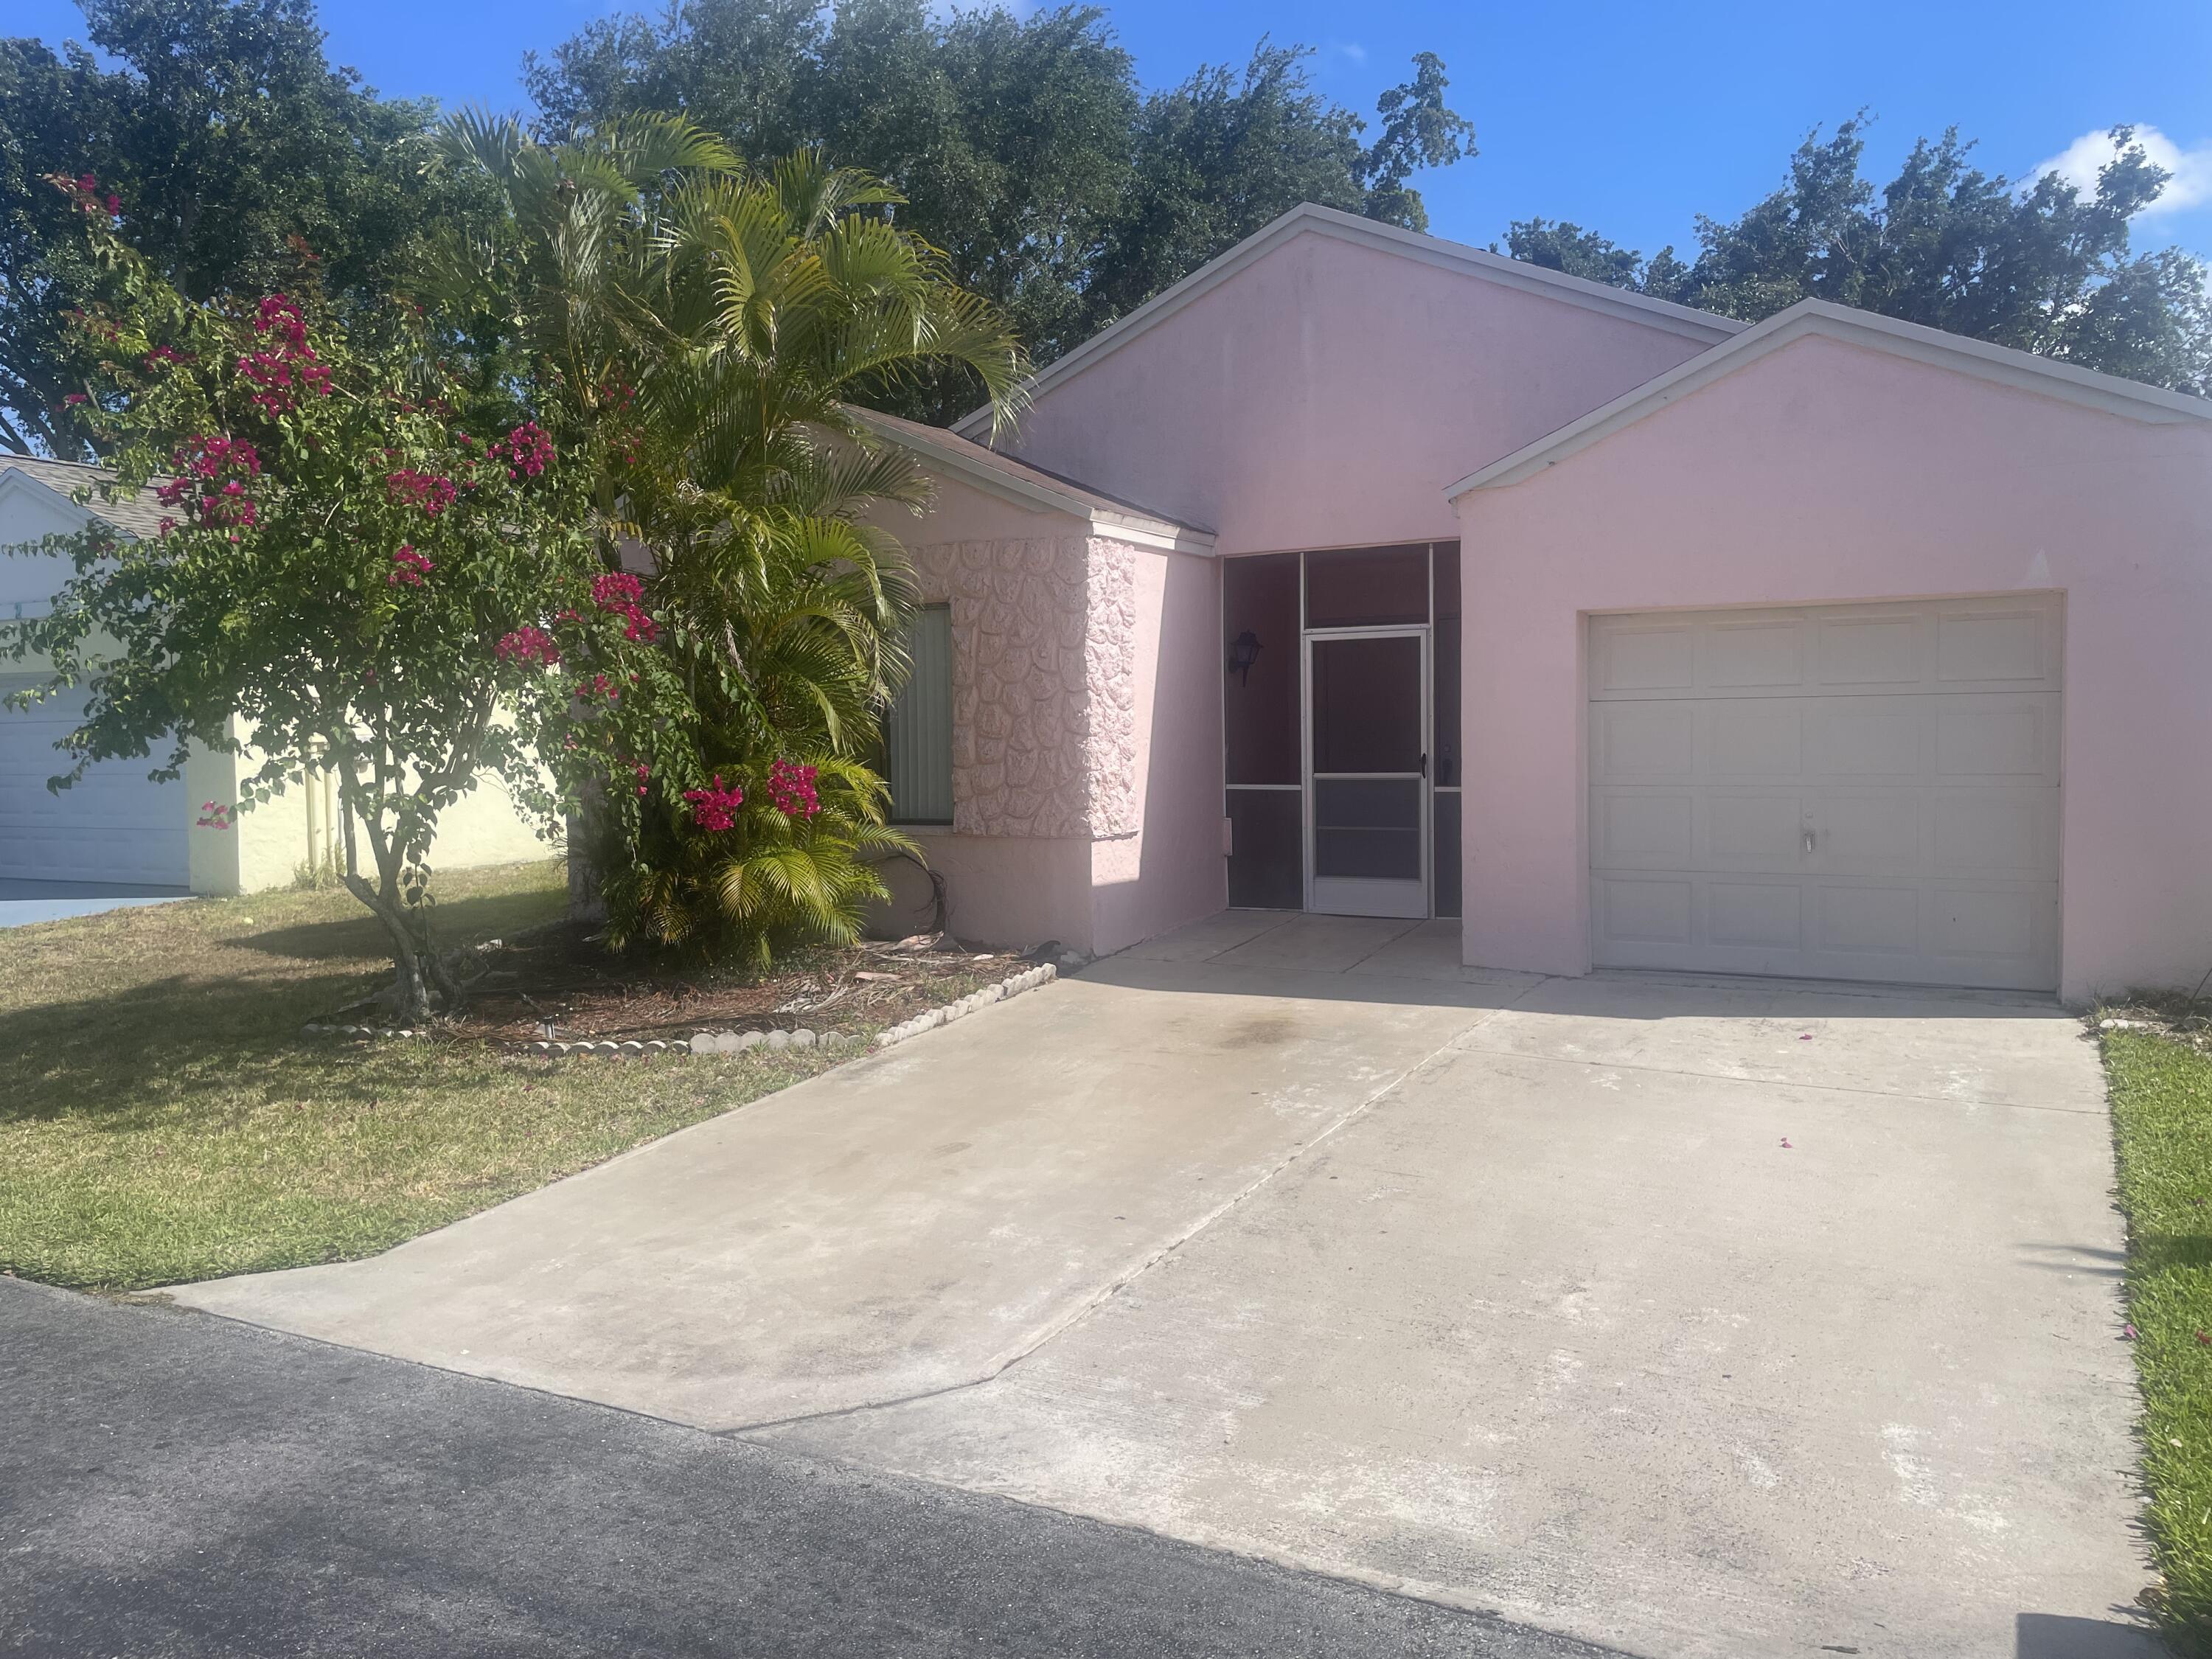 Property for Sale at 4 Beckley Place, Boynton Beach, Palm Beach County, Florida - Bedrooms: 3 
Bathrooms: 2  - $419,900